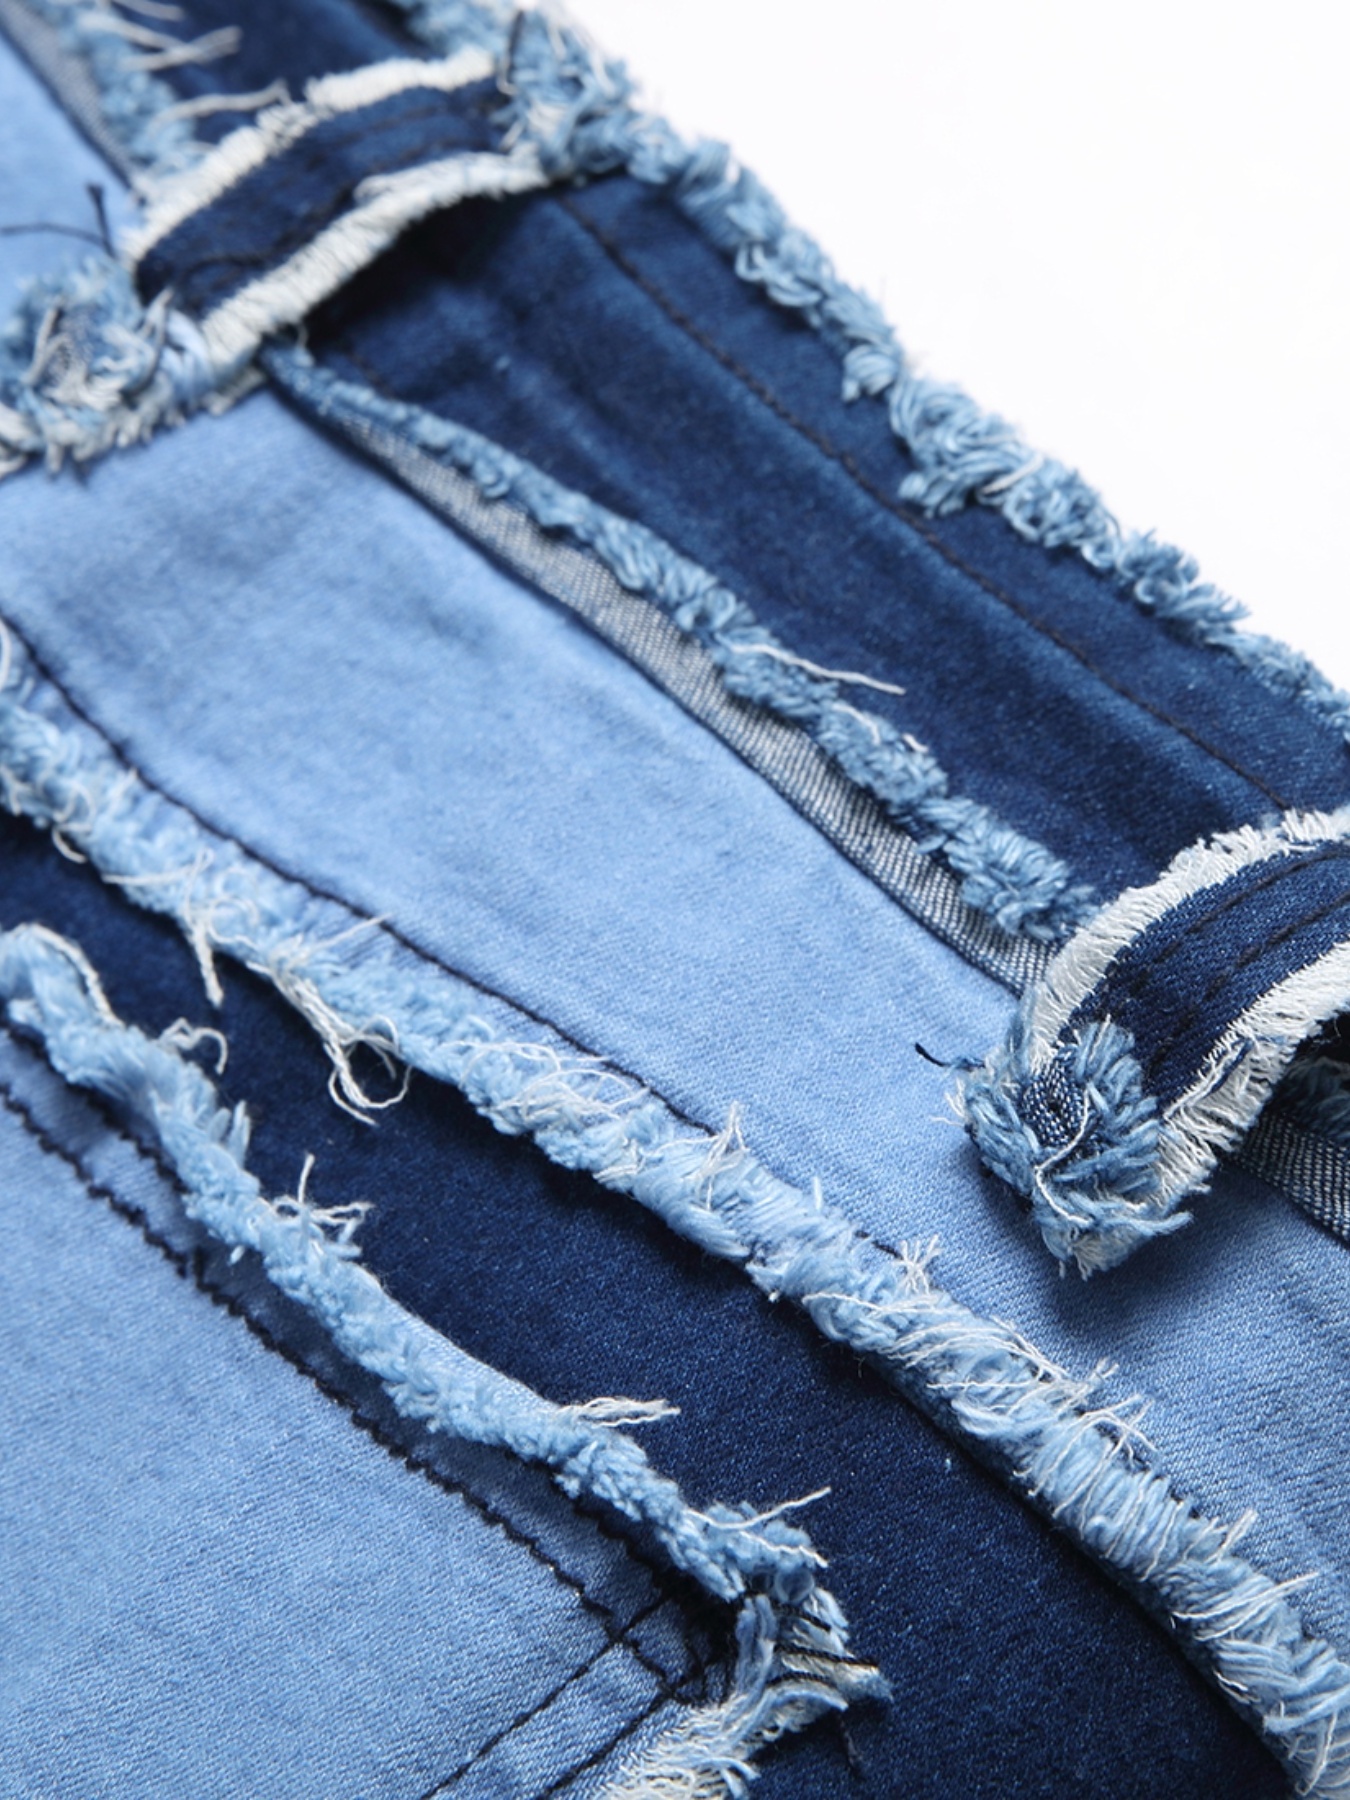 Jeans & Trousers, Zara Striped Small Size Pants